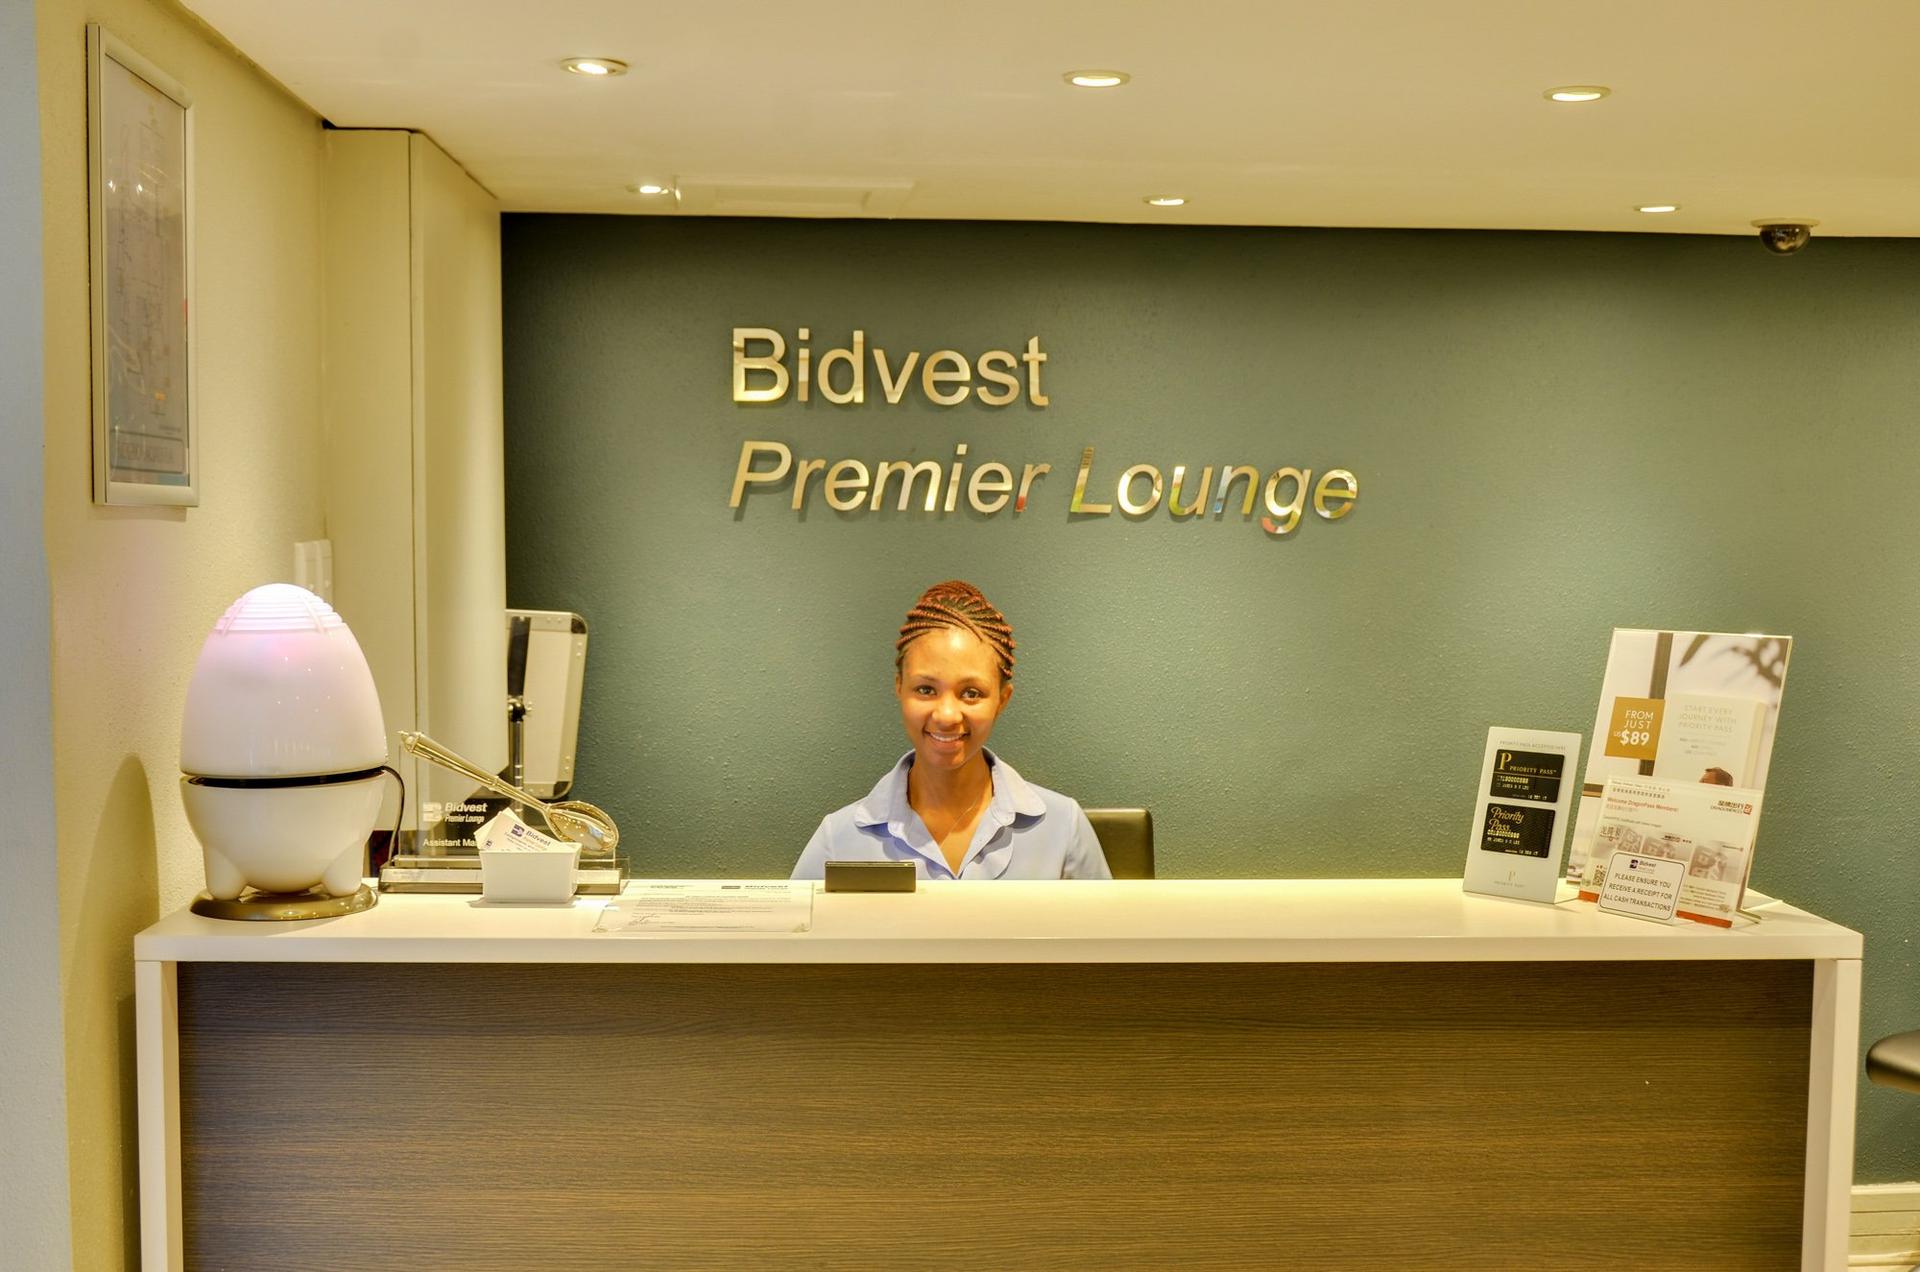 Bidvest Premier Lounge image 6 of 23